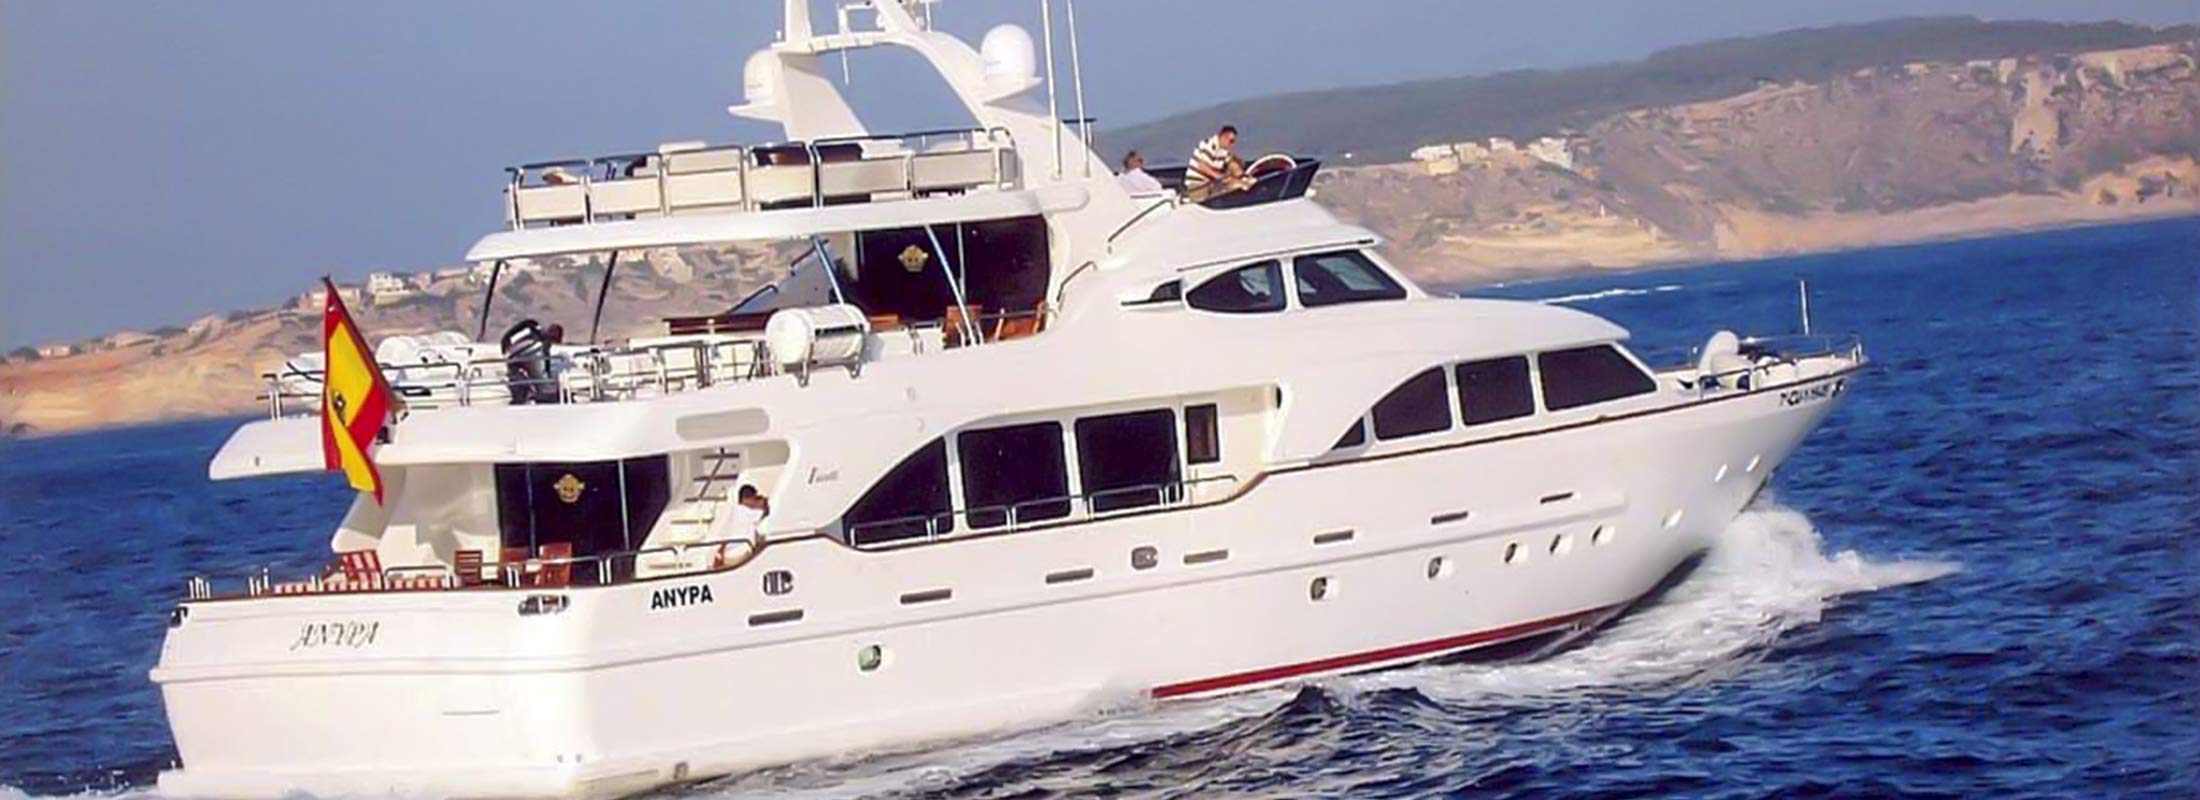 Anypa Motor Yacht for Charter Mediterranean slider 1